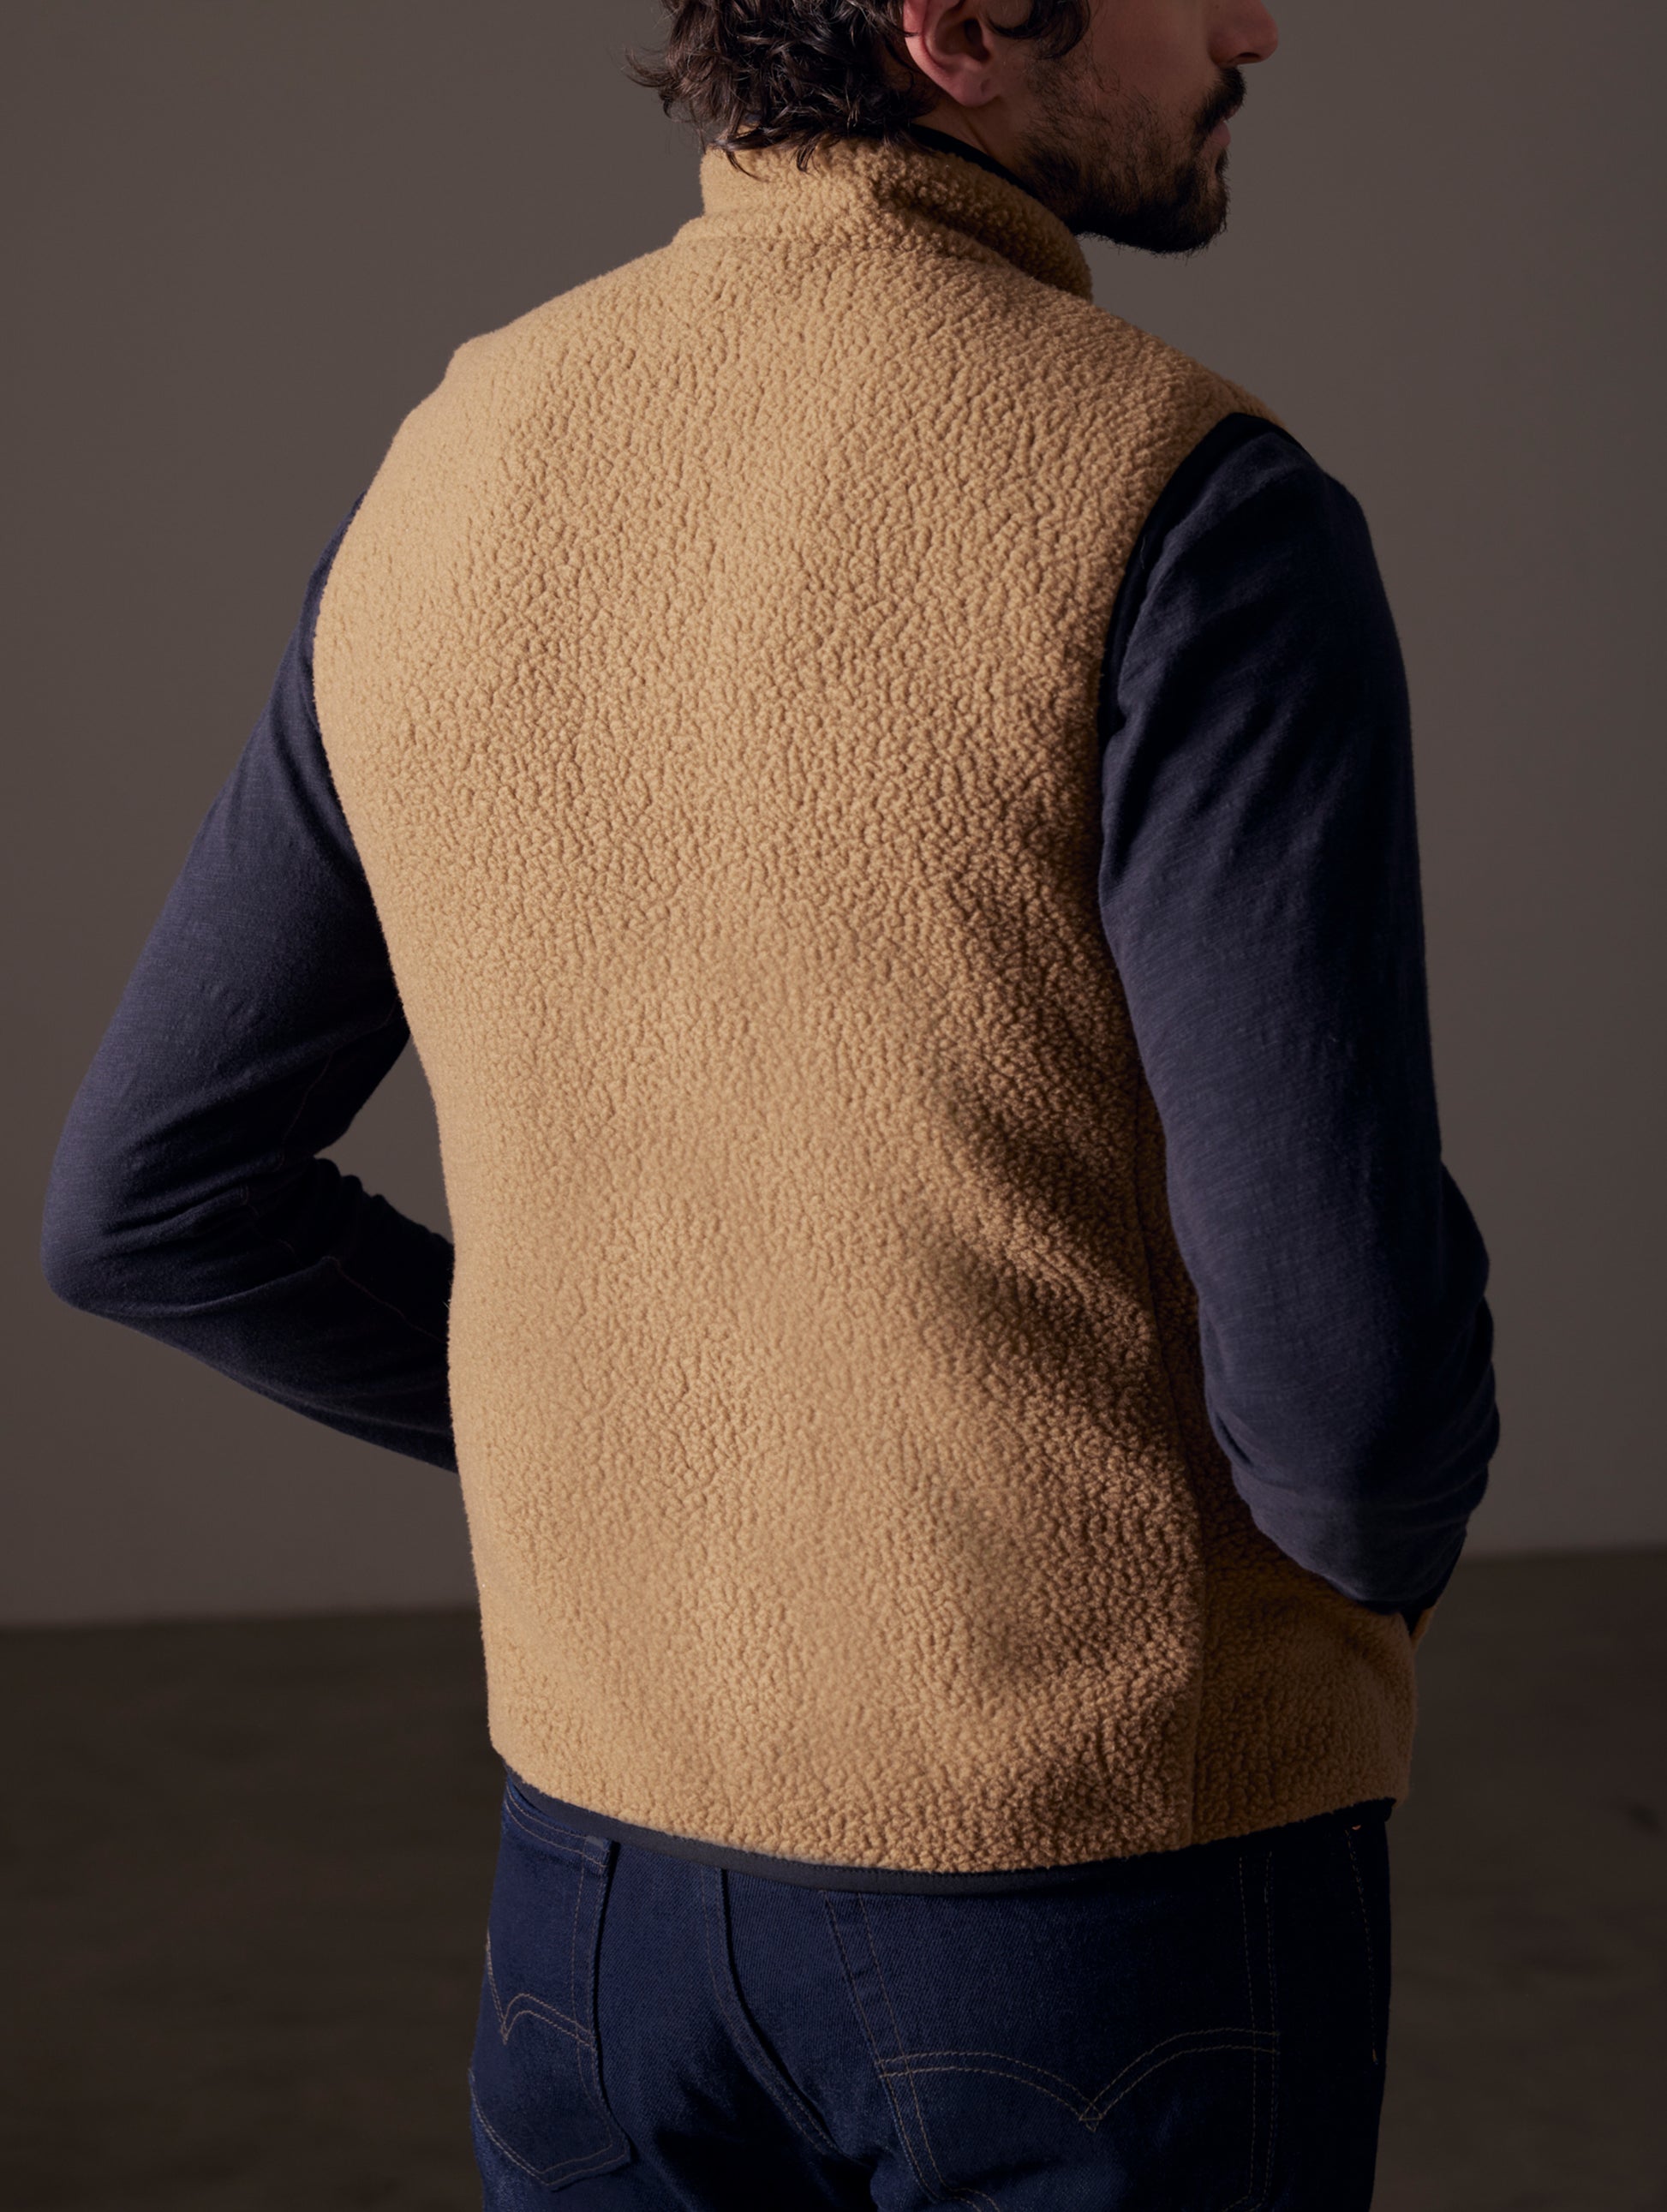 back view of man wearing brown fleece vest